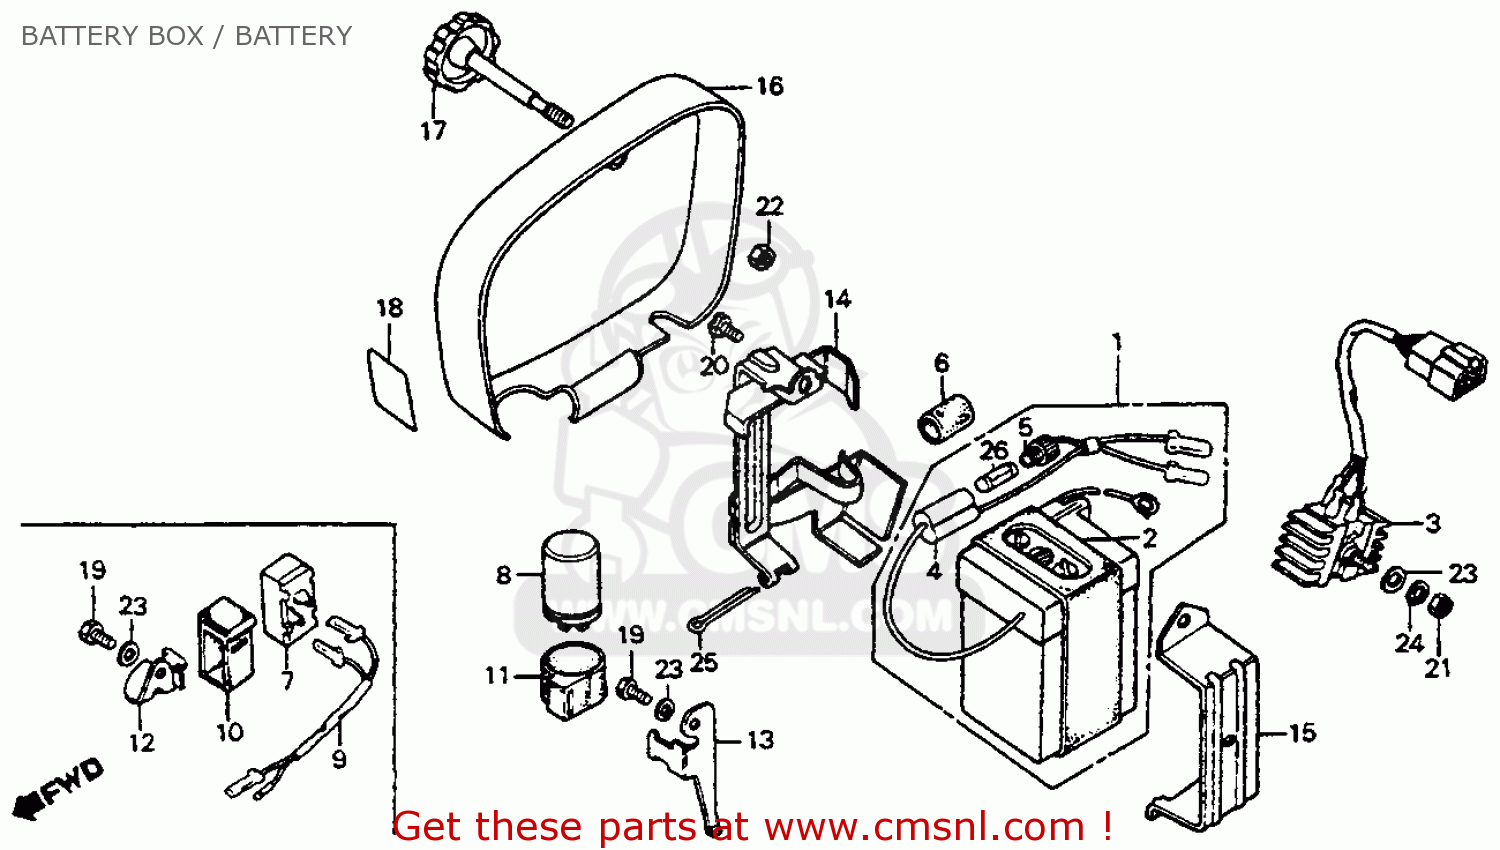 1978 Honda ct90 parts #2